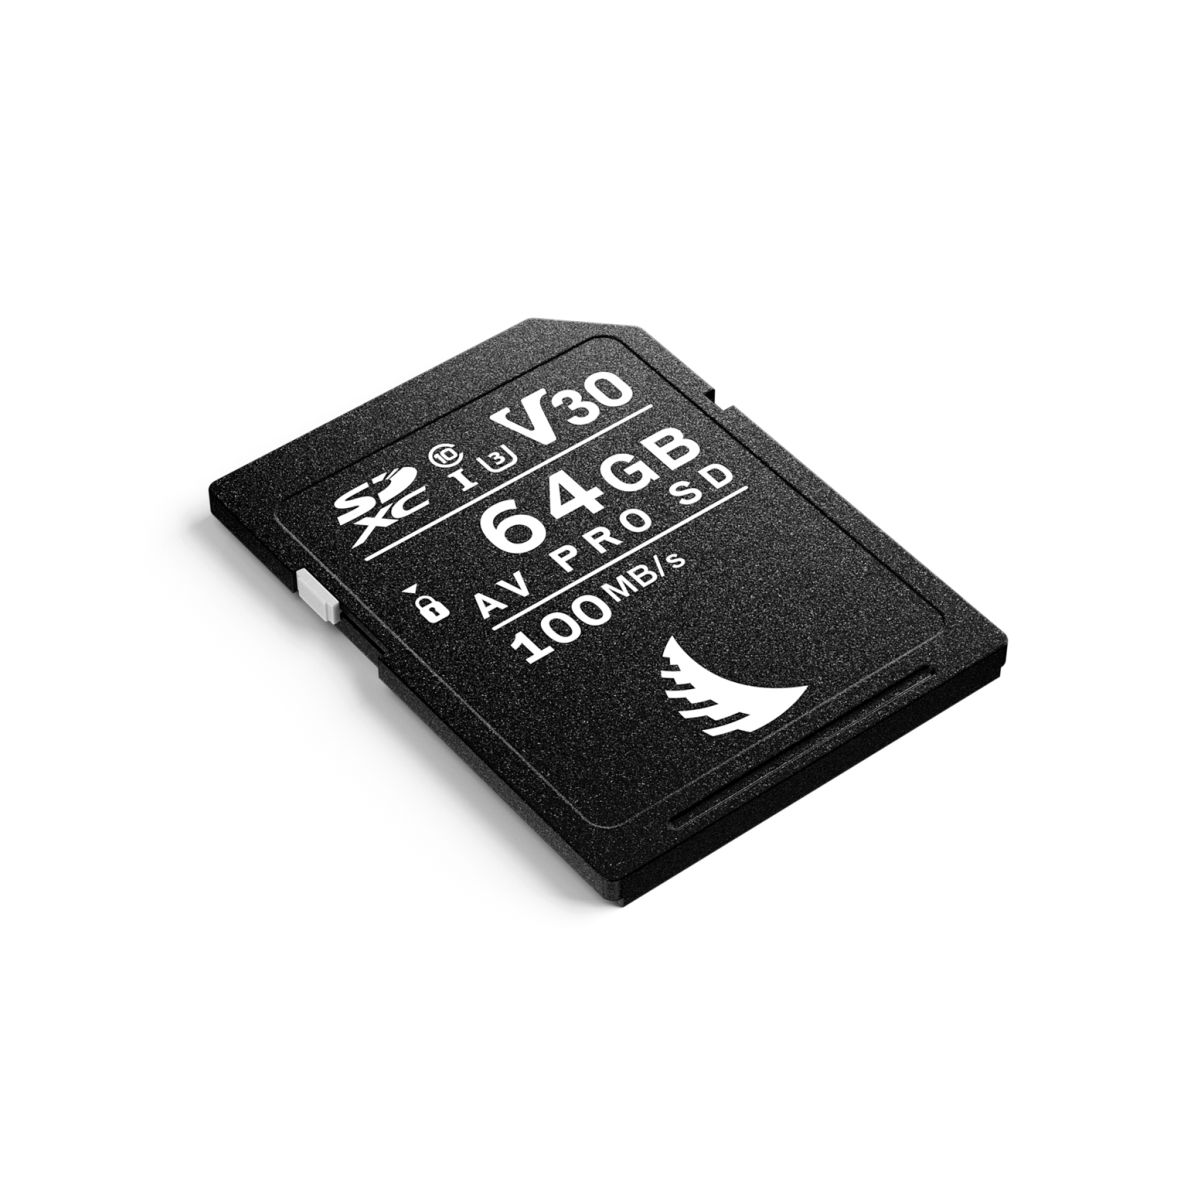 Angelbird 64 GB SD V30